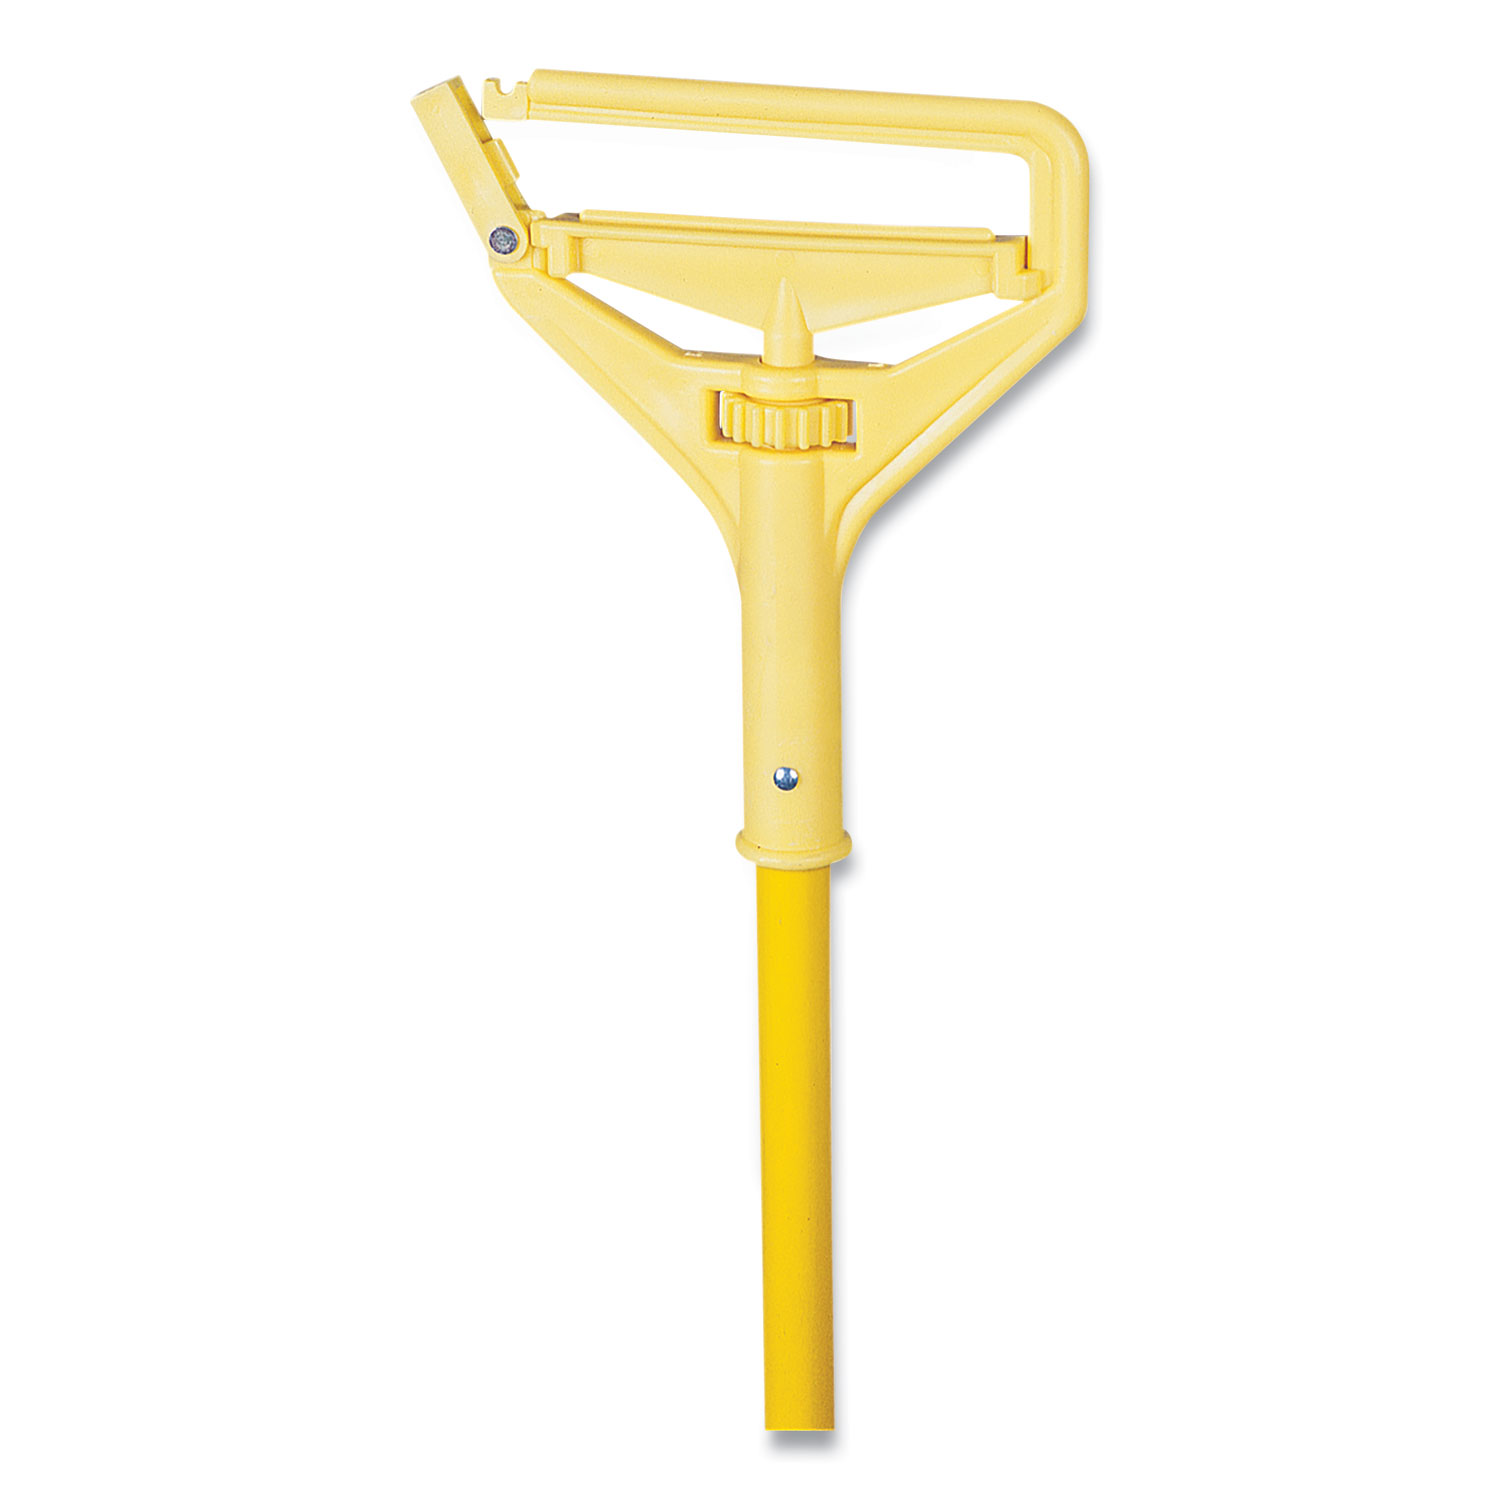 ODell® Quick Change Mop Handle. 60, Plastic, Yellow